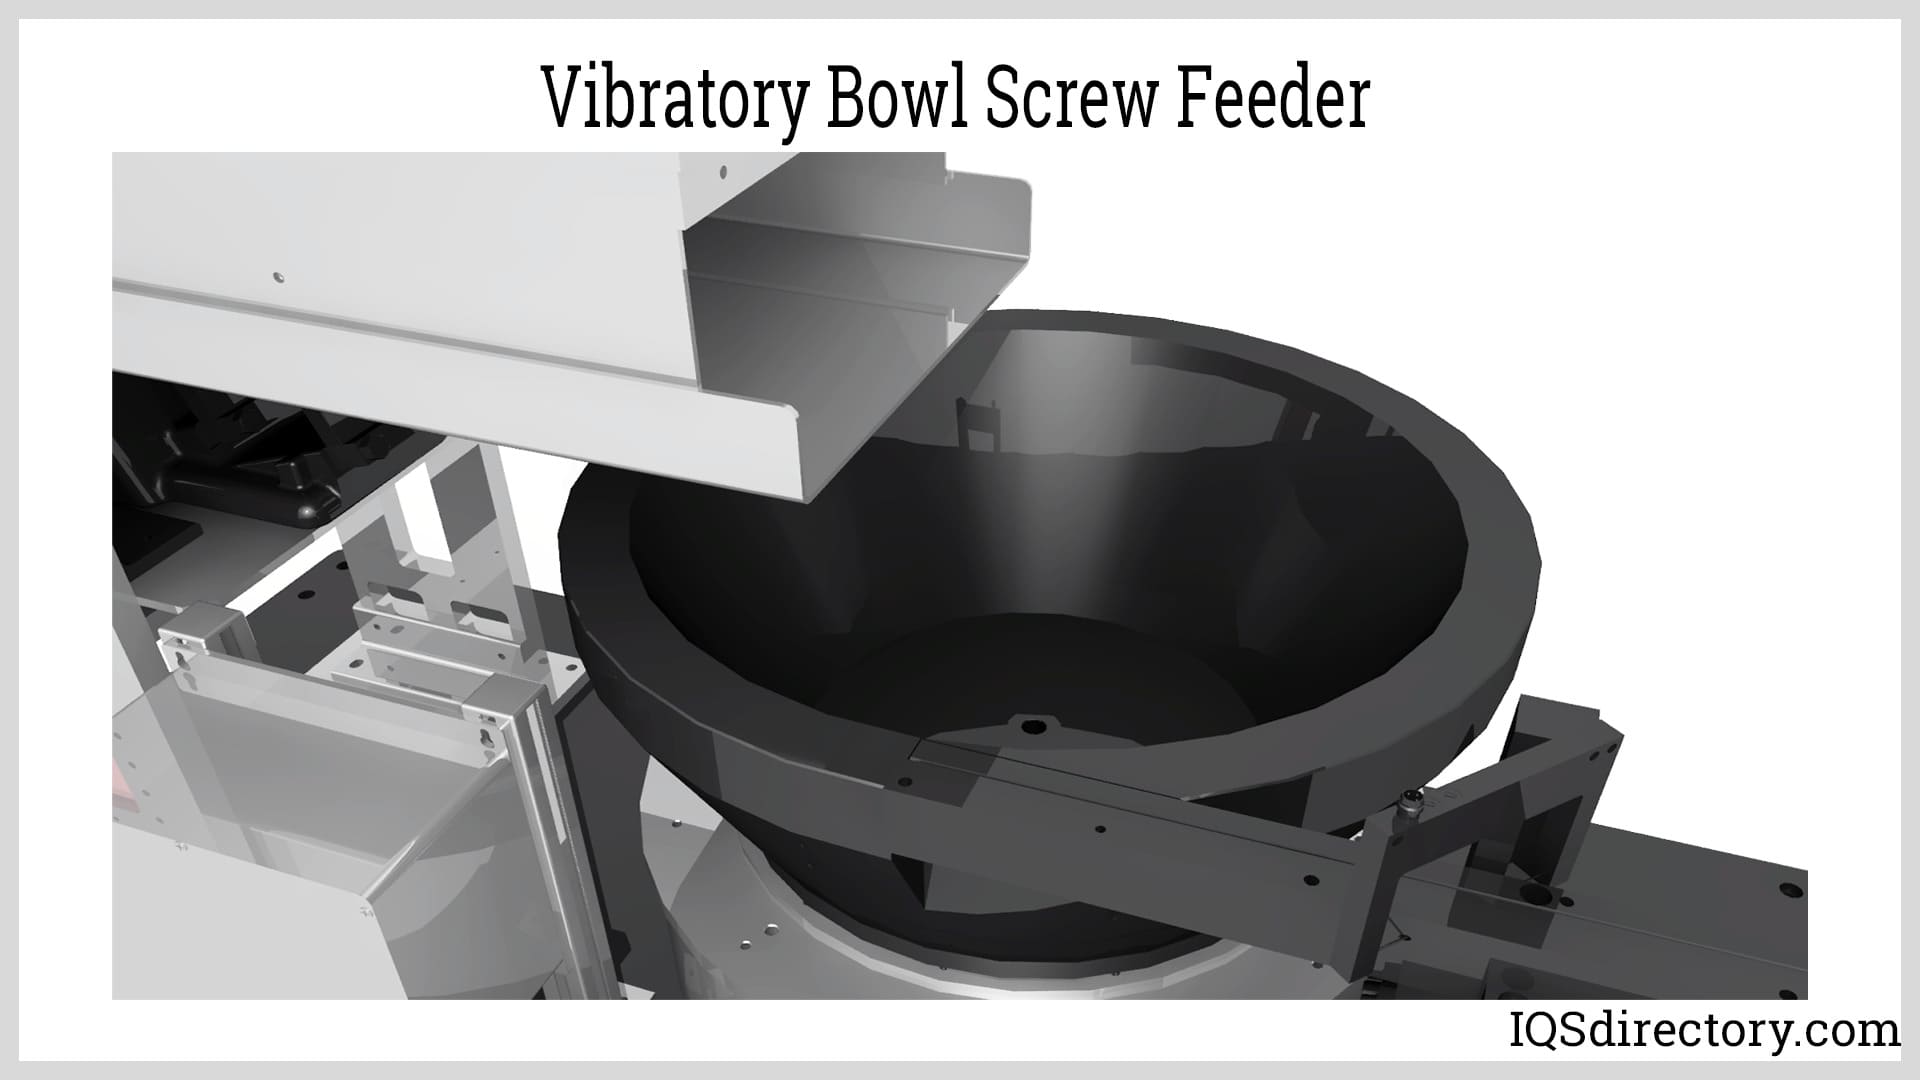 Vibratory Bowl Screw Feeder